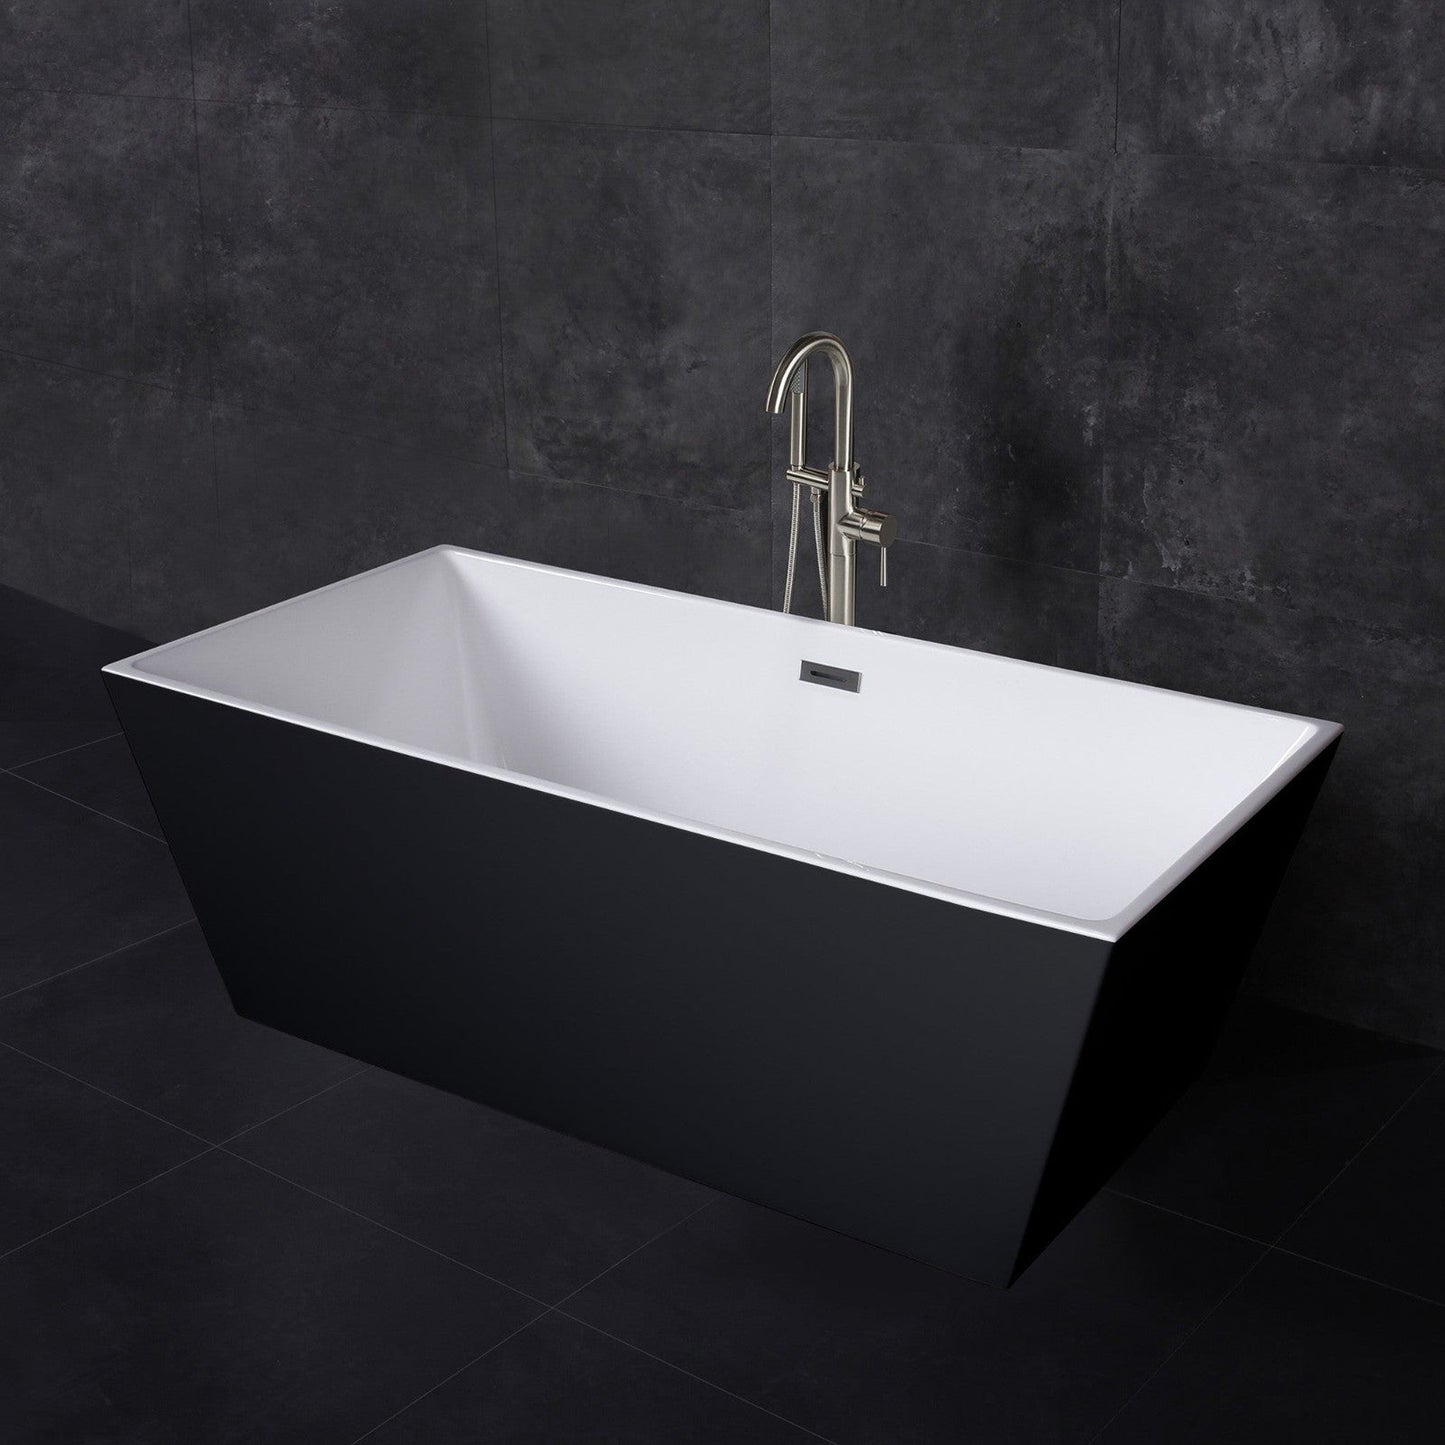 WoodBridge BTA1812 67" Black Acrylic Freestanding Soaking Bathtub With Brushed Nickel Drain, Overflow, F0070BNVT Tub Filler and Caddy Tray